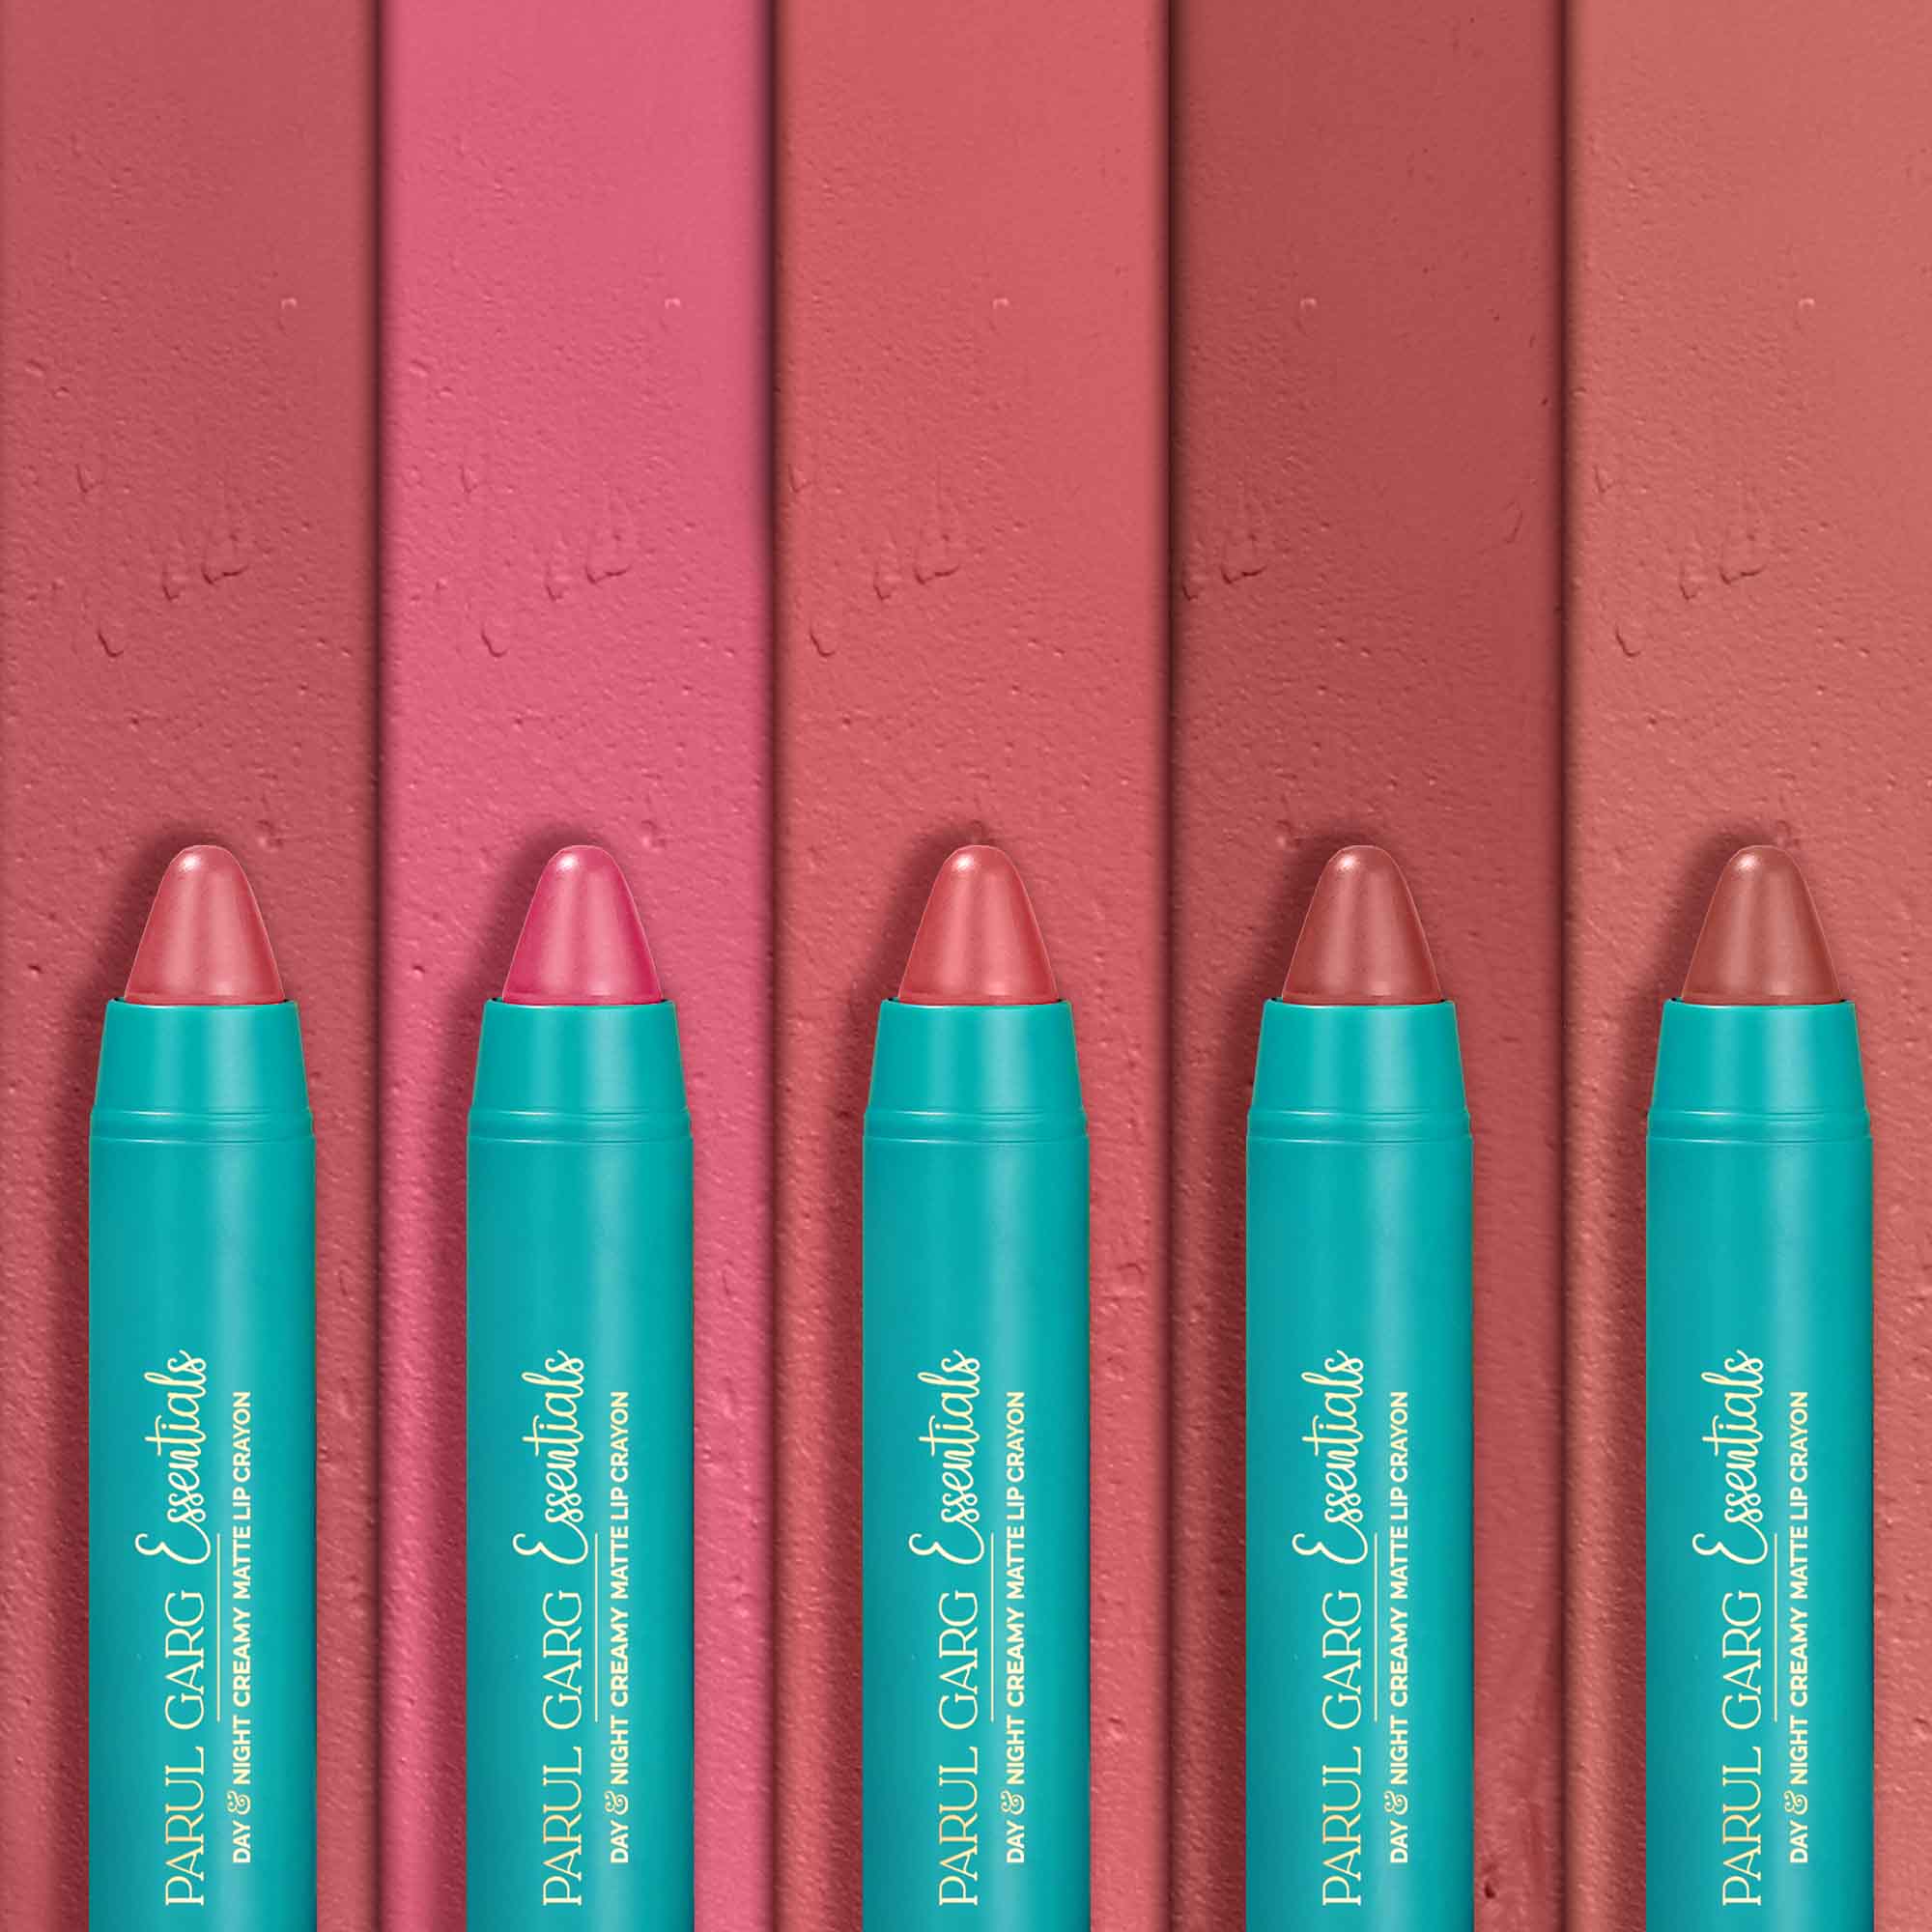 Corporate Essentials: Pack-of-Five Creamy Matte Lip Crayons